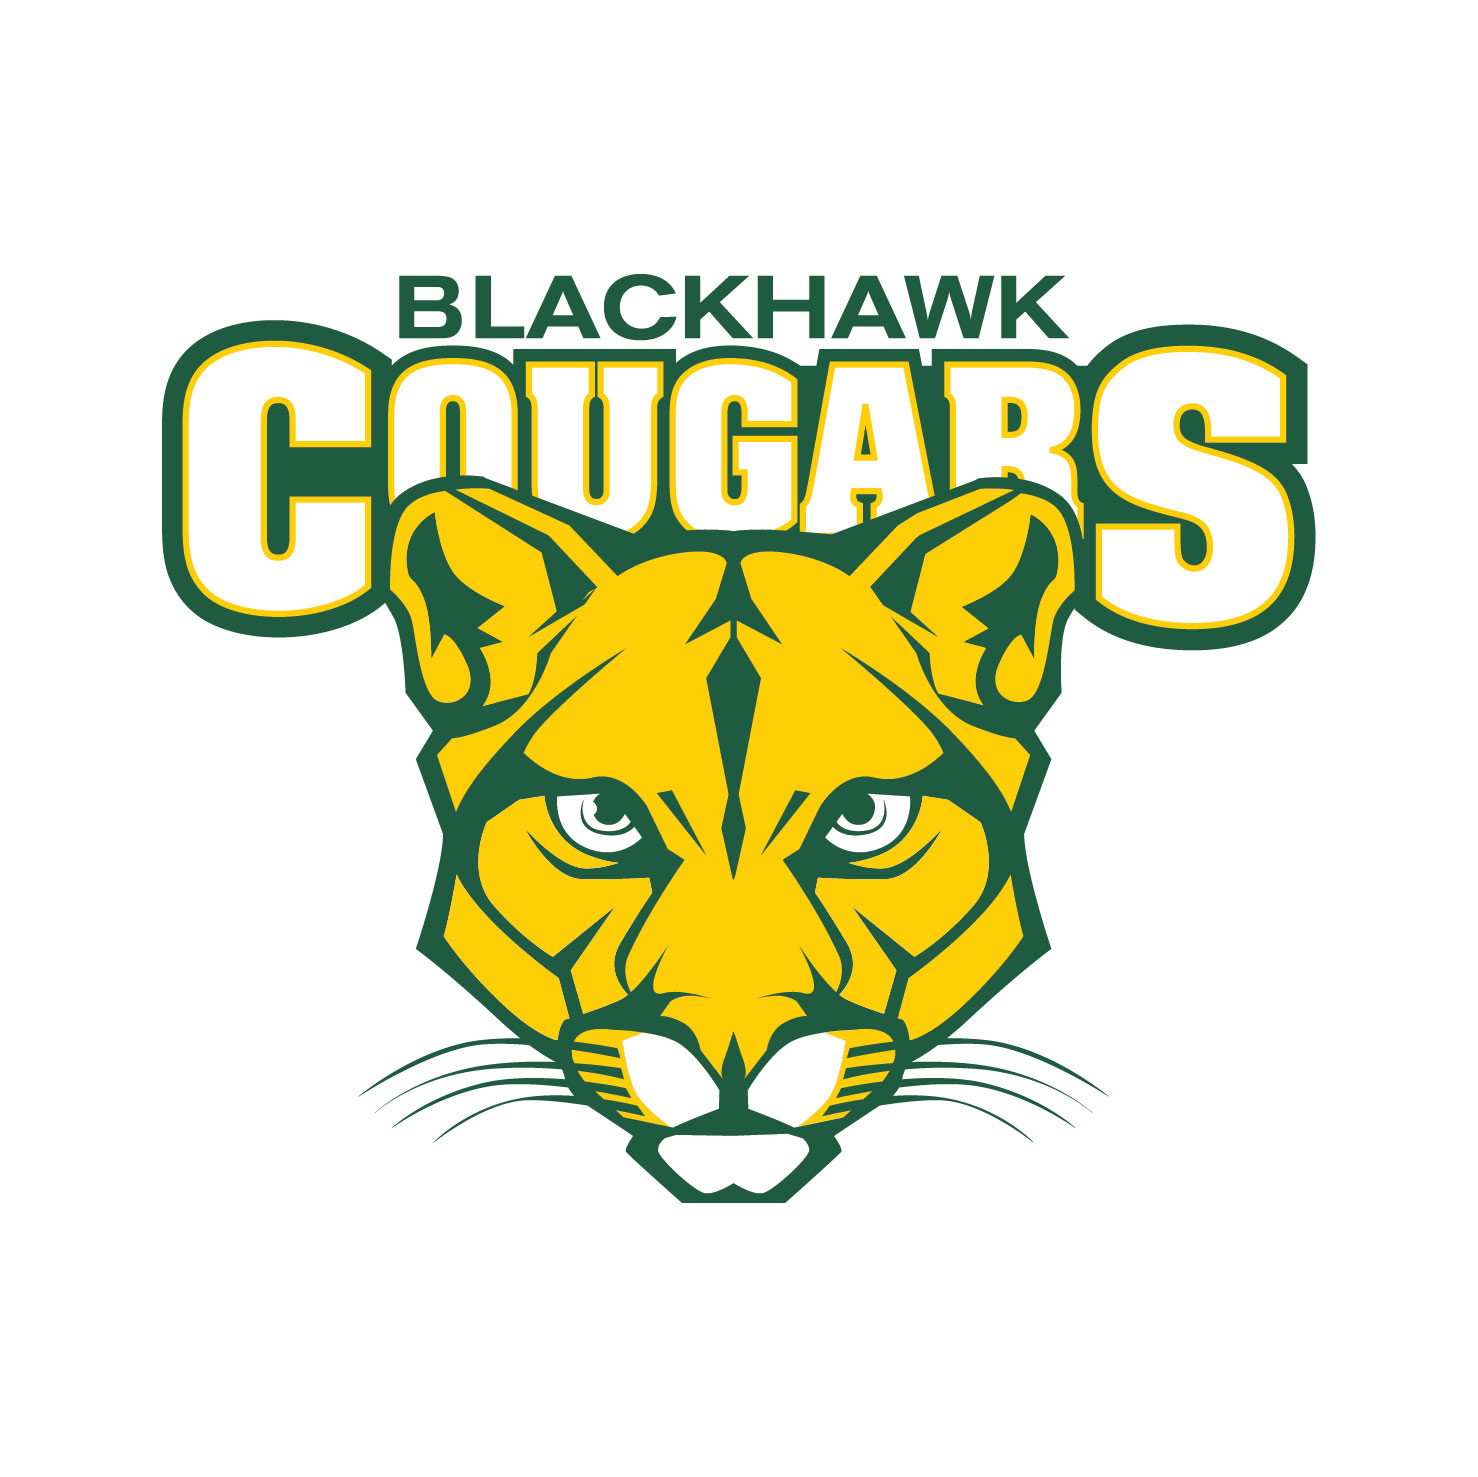 The logo of Blackhawk School District